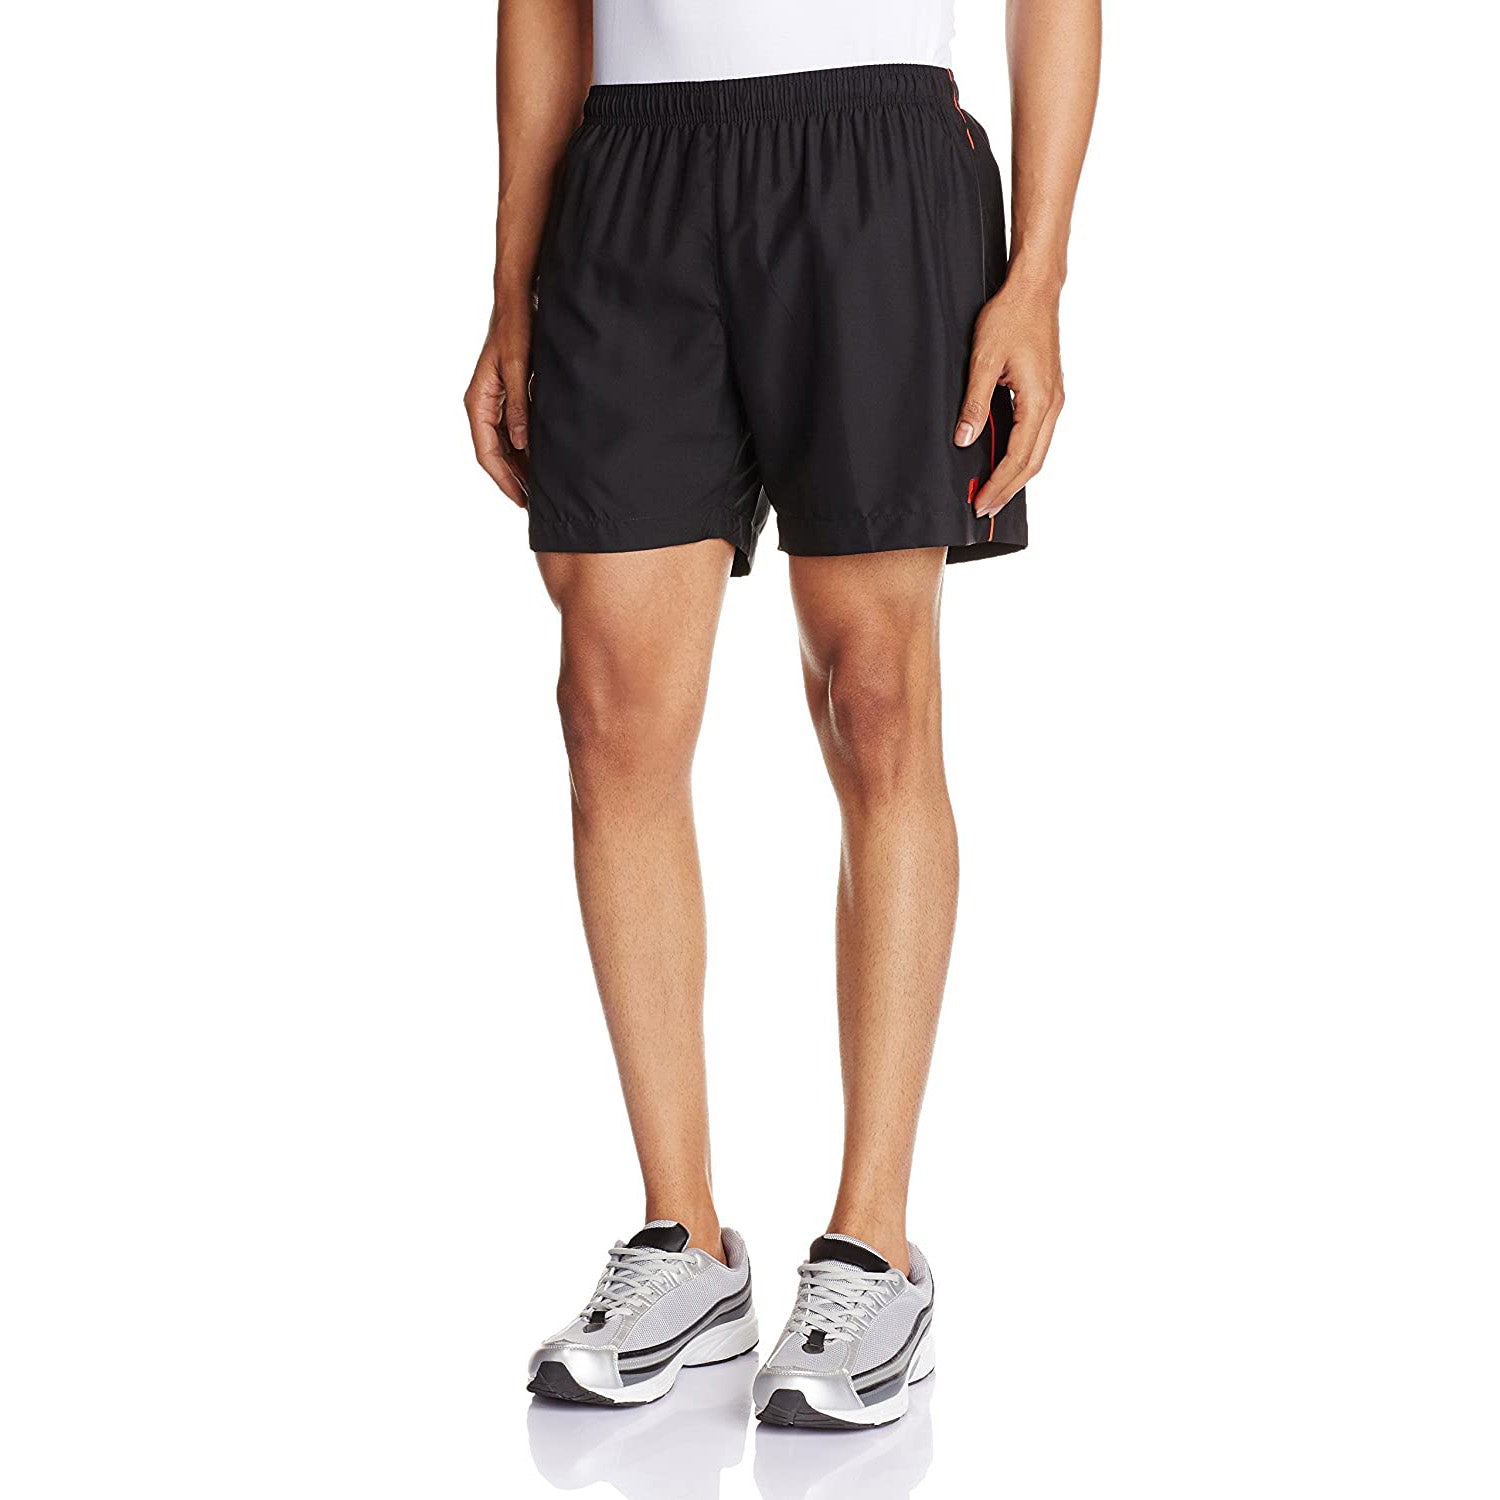 Vector X VS-600 Men's Sports Shorts ,Black - Best Price online Prokicksports.com